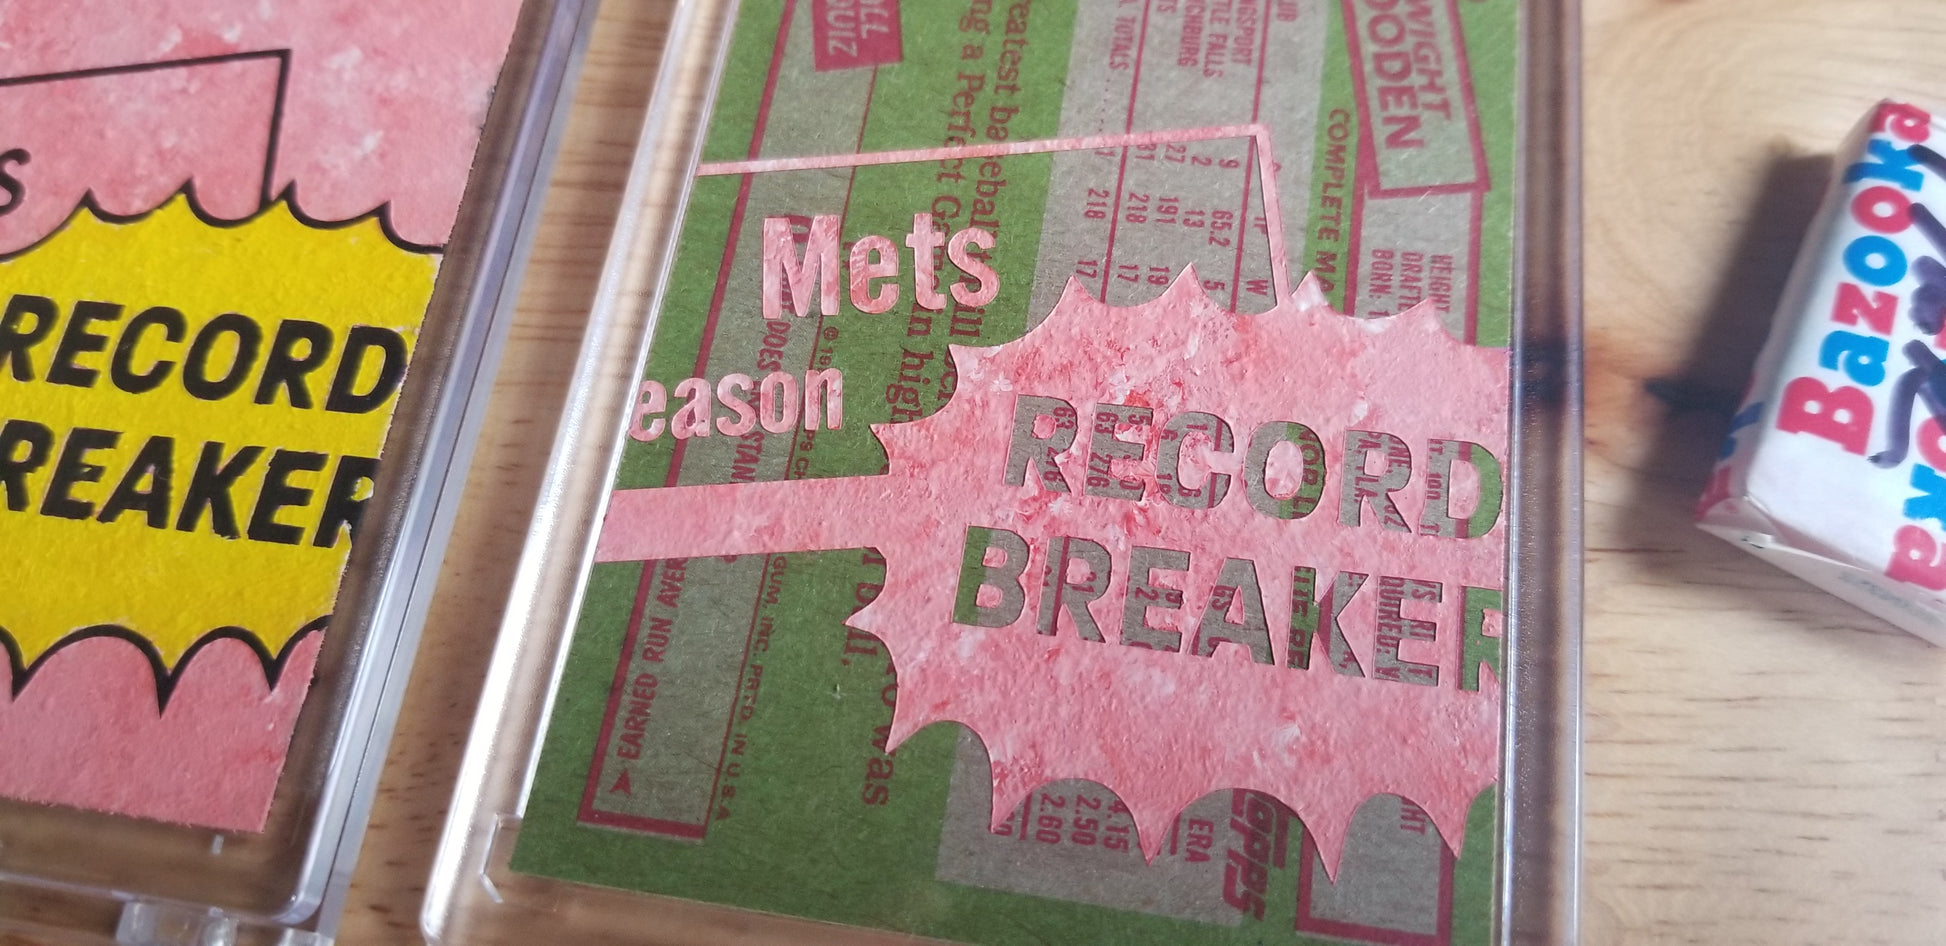 Baseball card art by Matthew Lee Rosen (aka Matthew Rosen) - Dwight Gooden Record Breaker